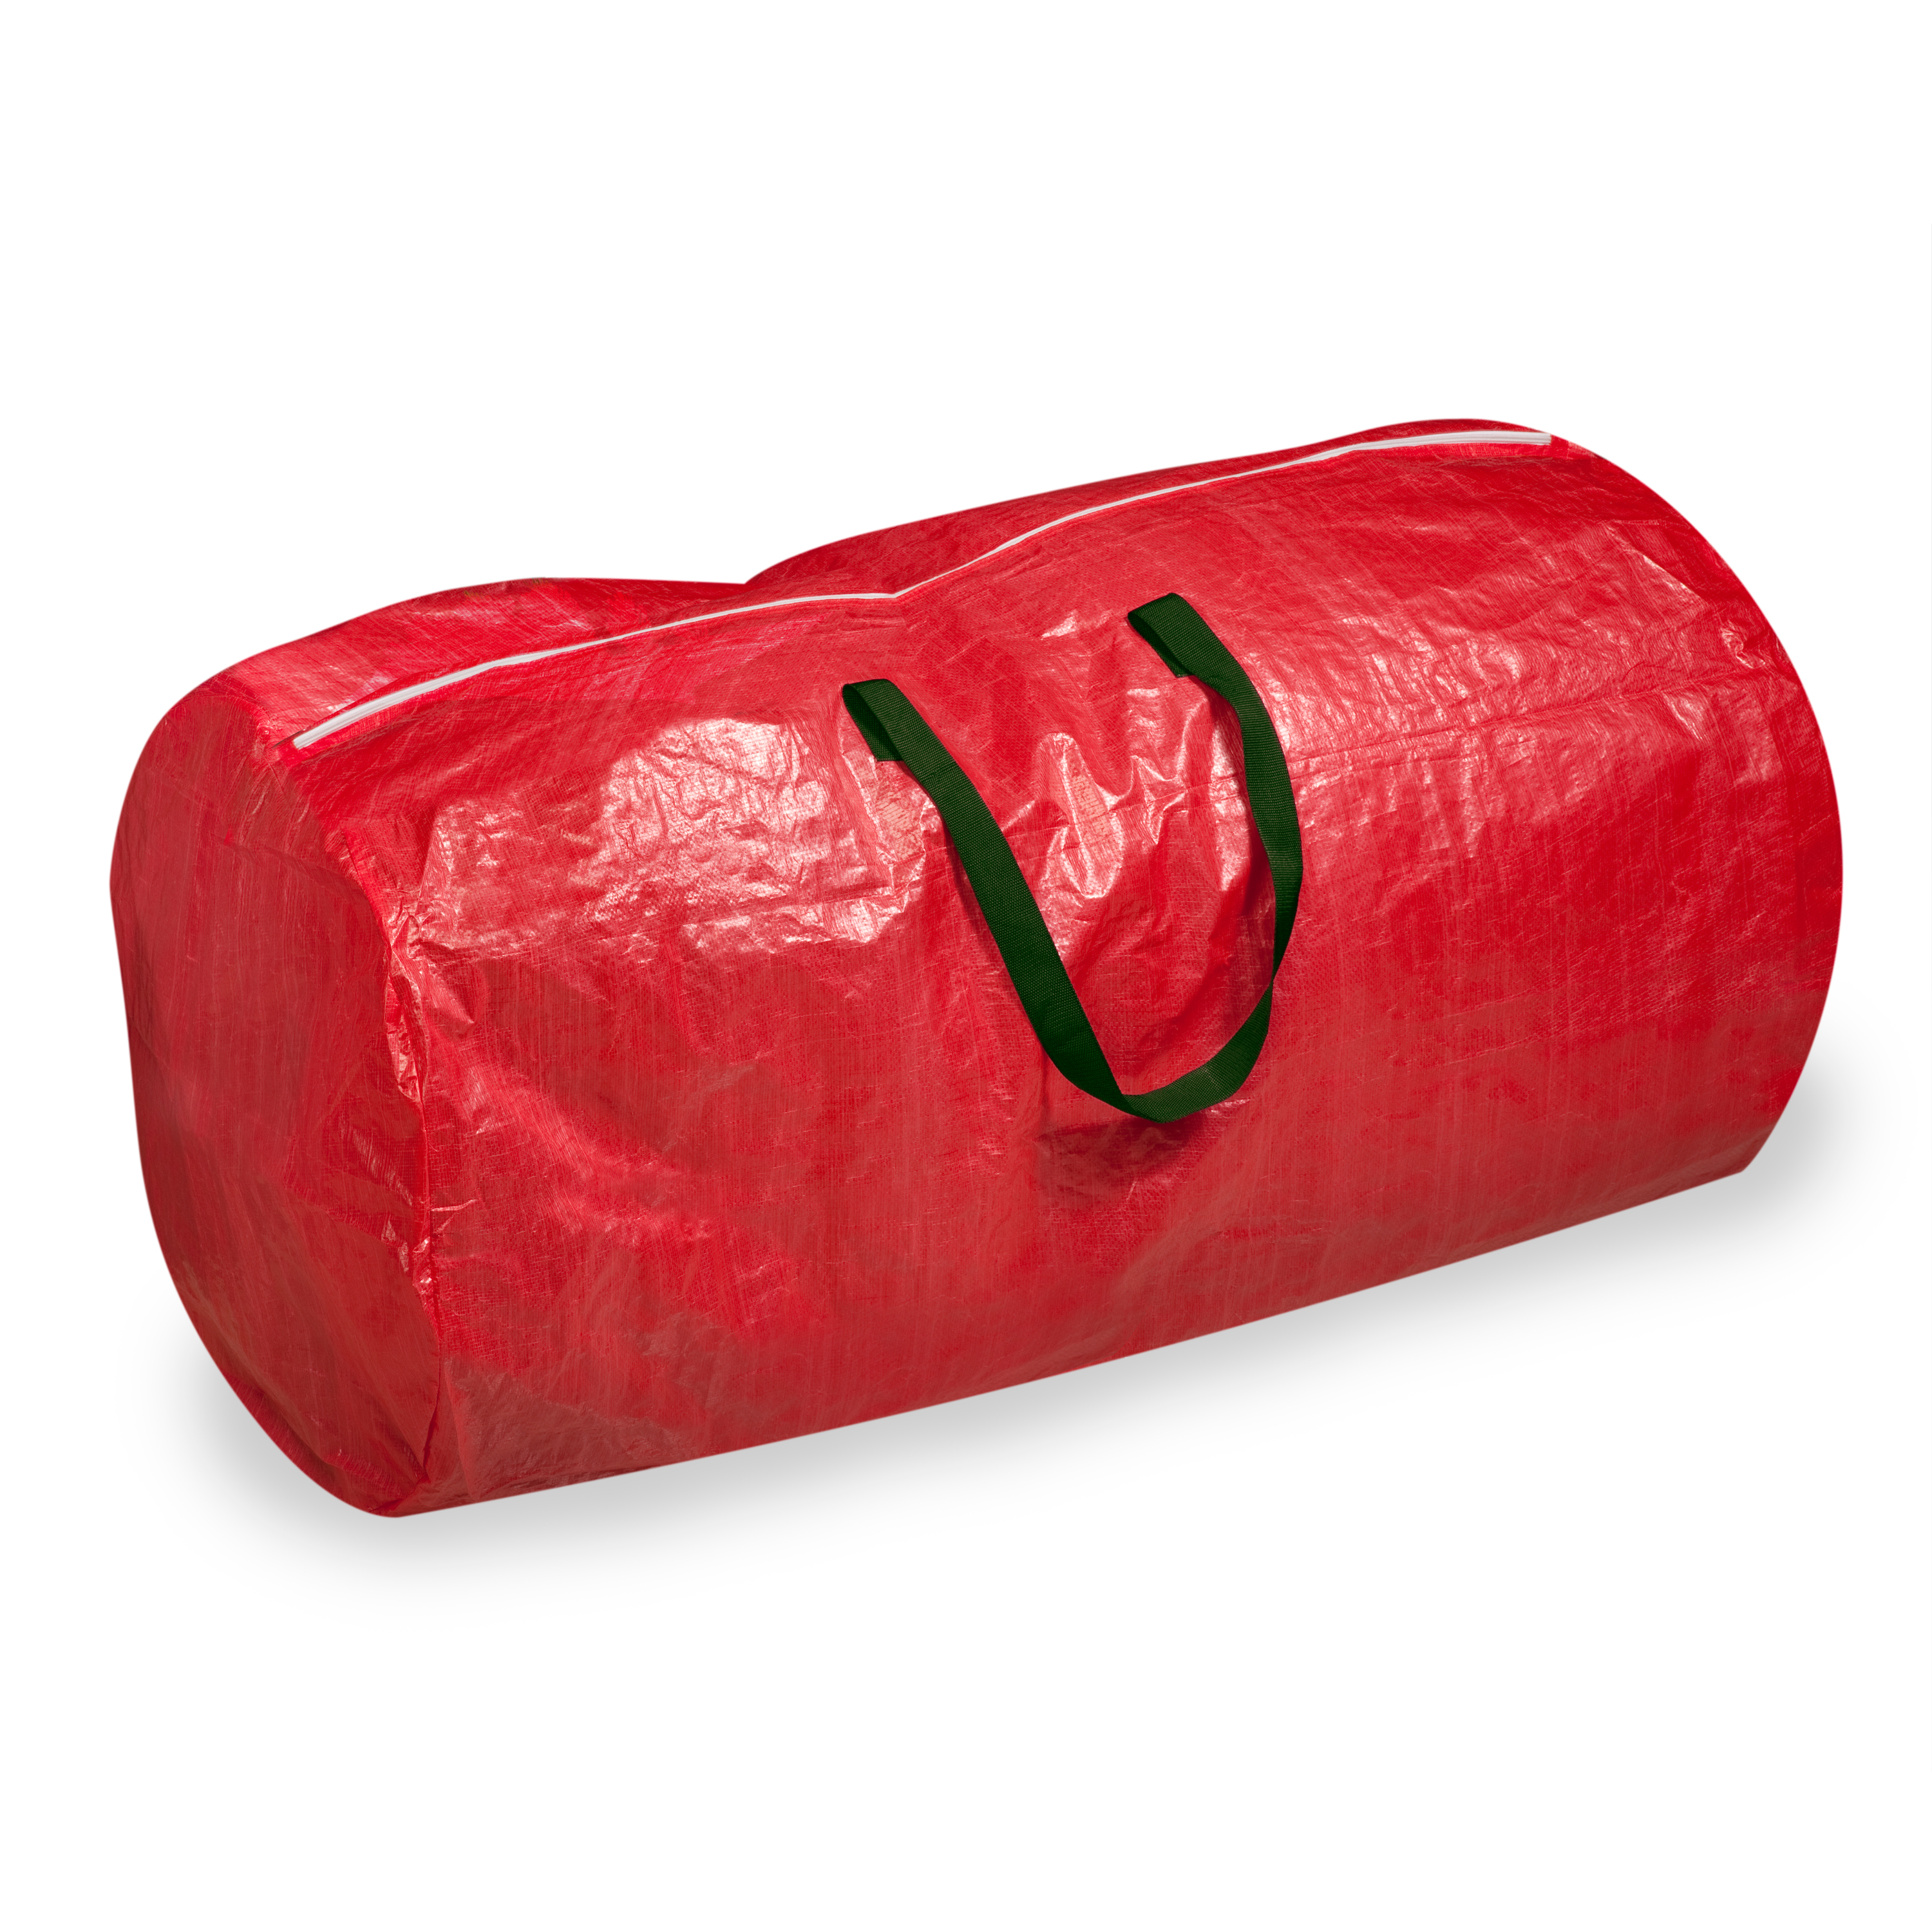 Honey-Can-Do Polyethylene 7' Christmas Tree Storage Bag with Handles, Red - image 2 of 6